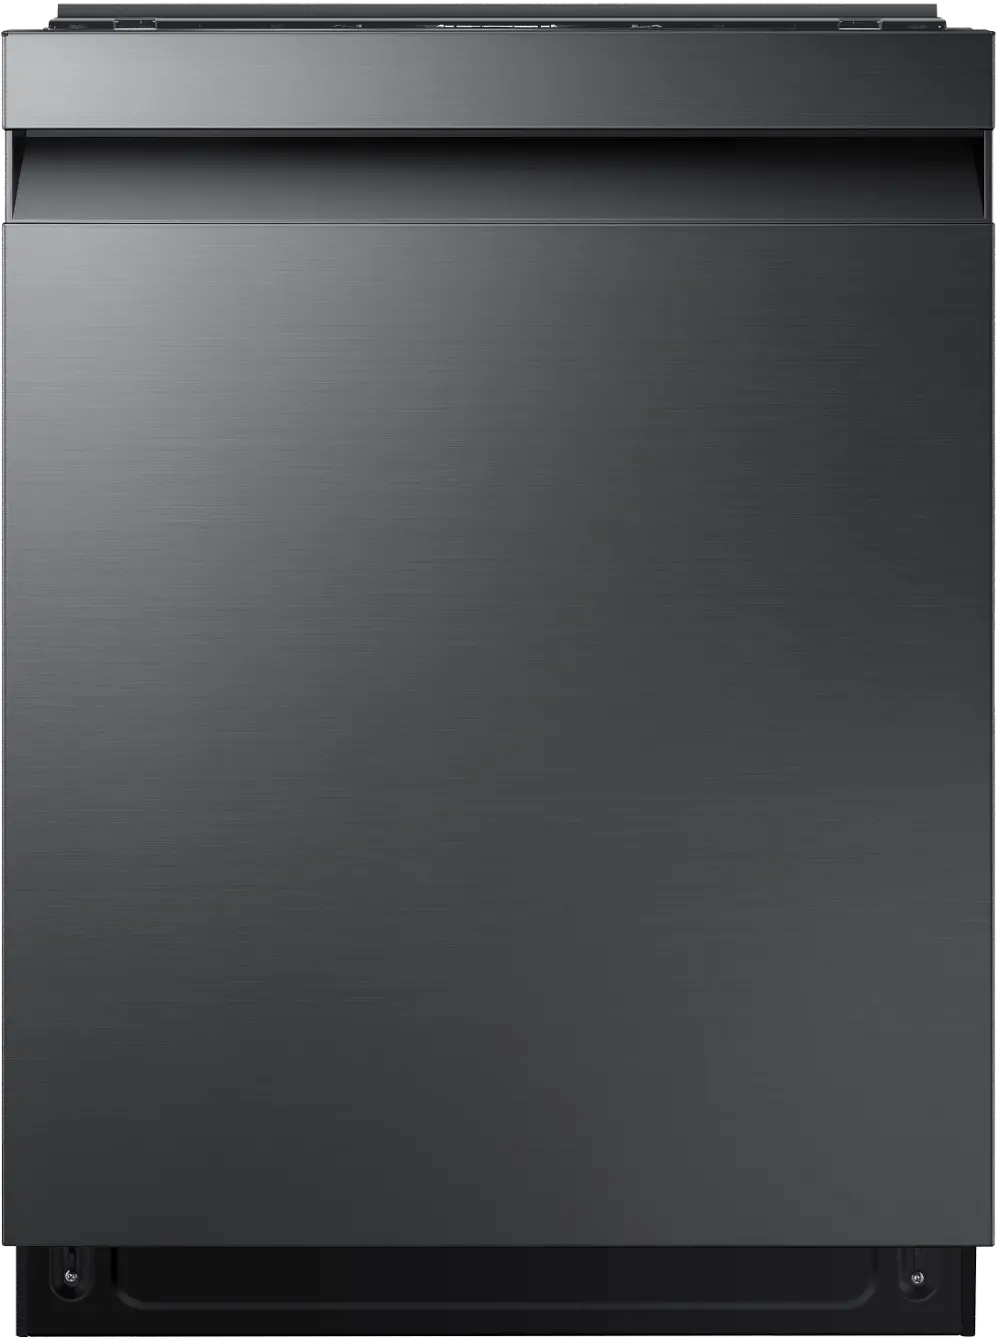 DW80R7060UG Samsung Top Control Dishwasher - Black Stainless Steel-1